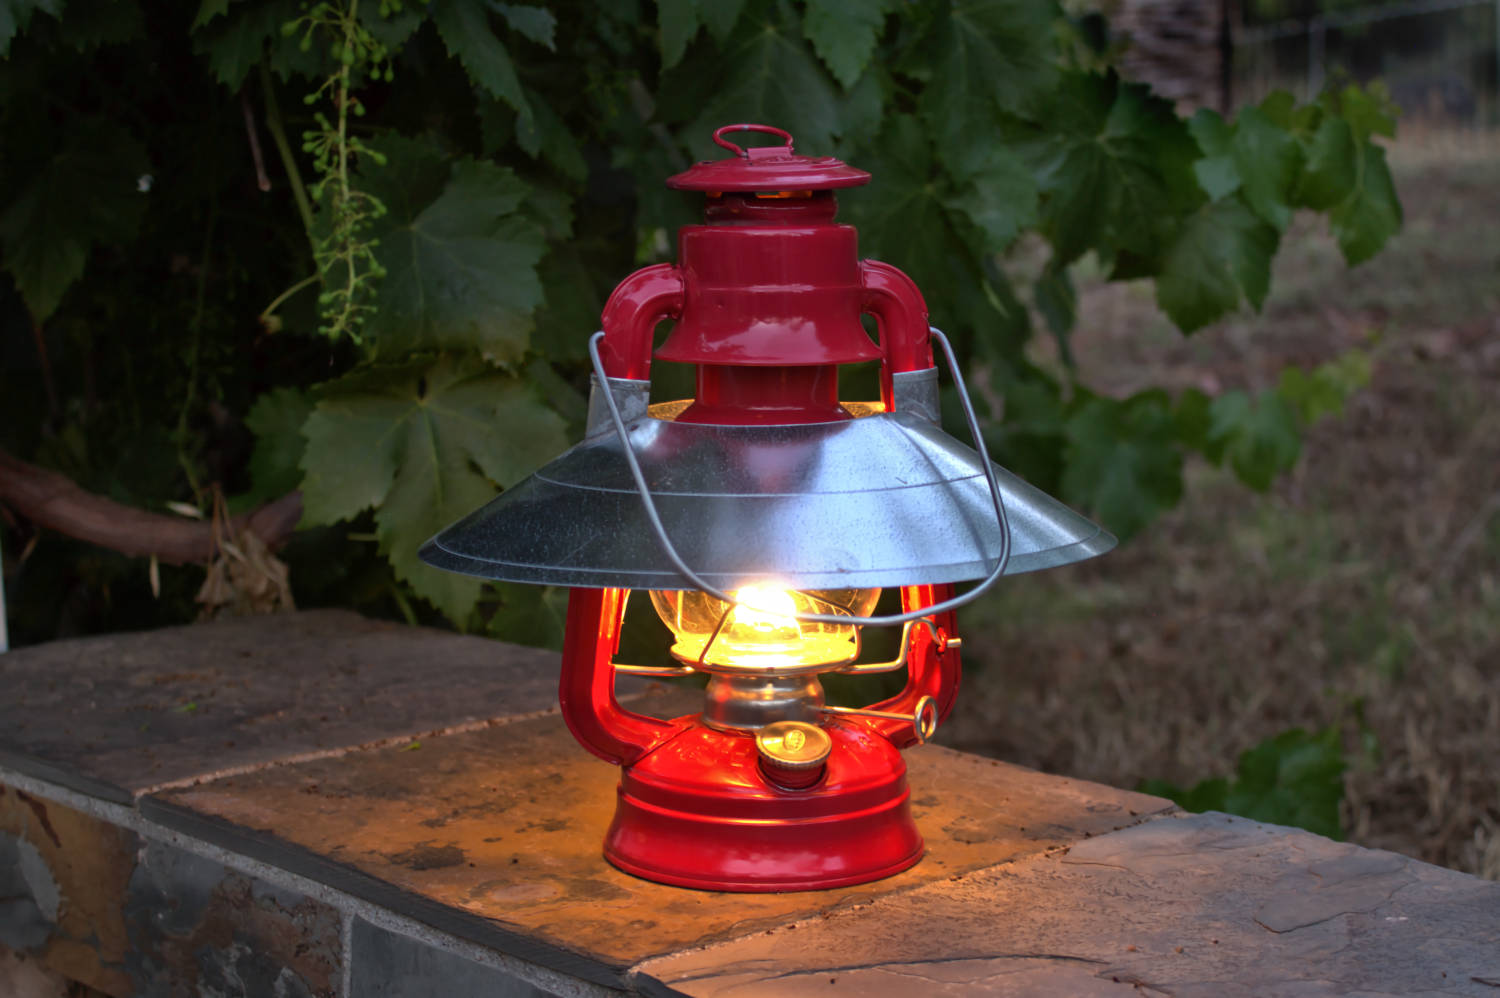 Dietz #76 Original Cold Blast Lantern — The Source for Oil Lamps